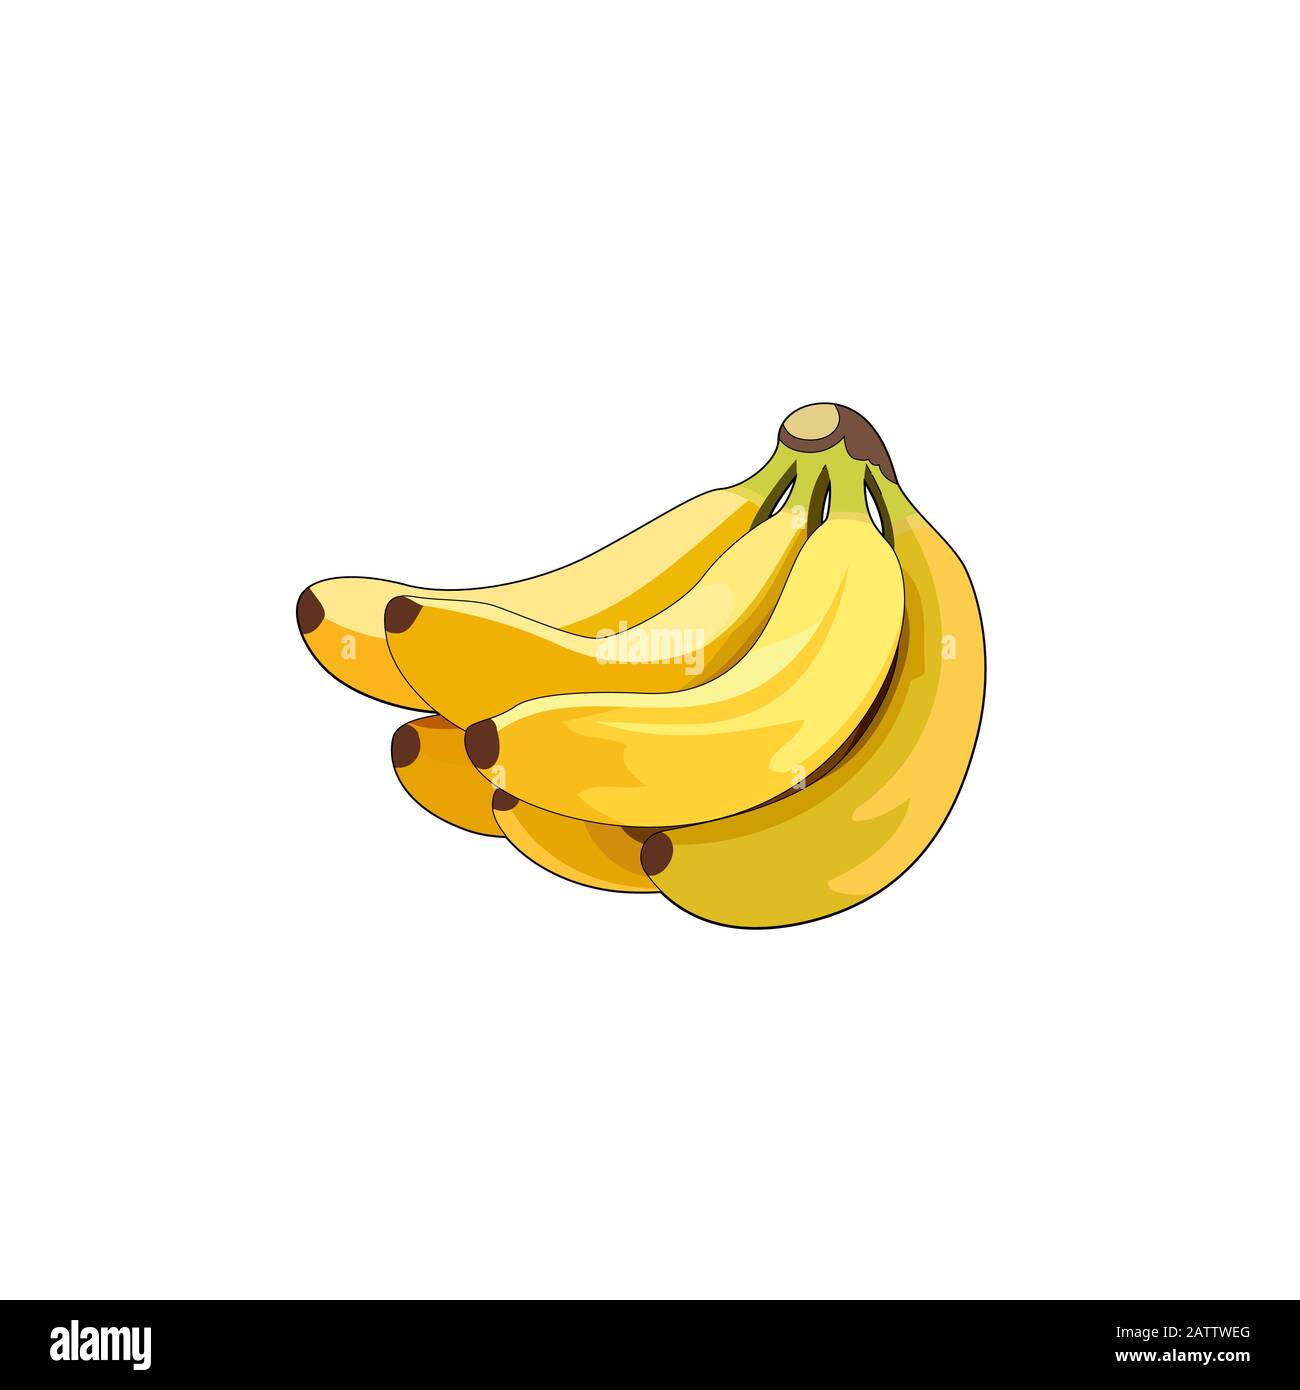 https://c8.alamy.com/comp/2ATTWEG/bananas-fresh-banana-fruit-healthy-vegan-food-vector-graphic-illustration-2ATTWEG.jpg